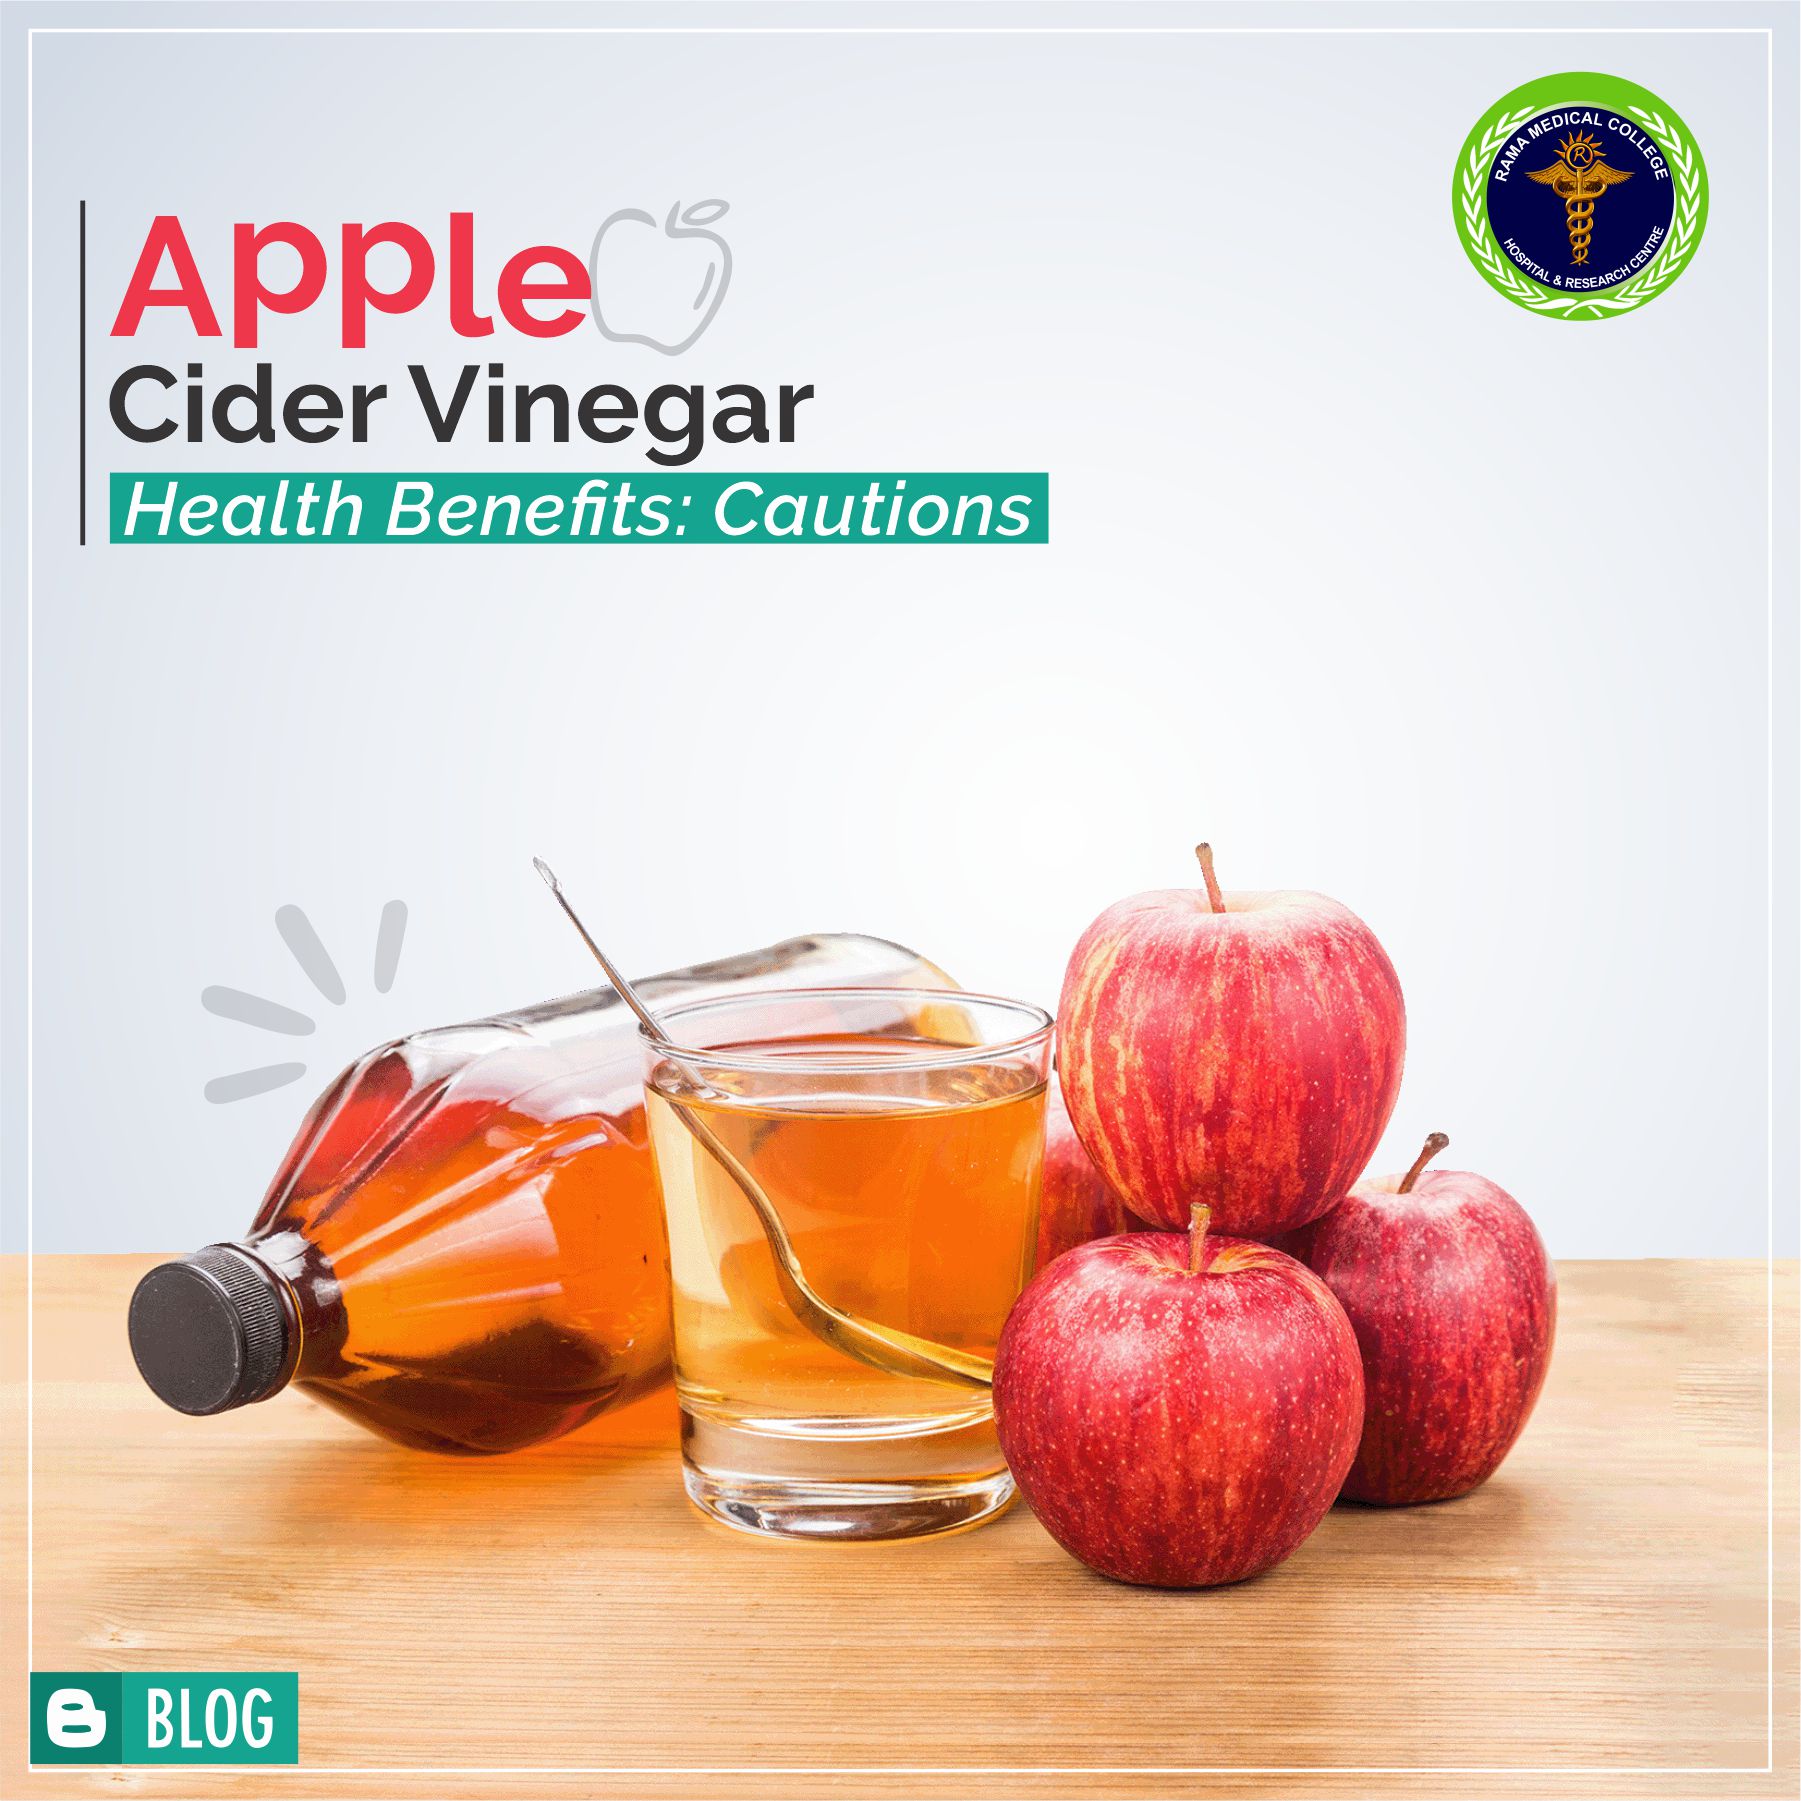 Apple Cider Vinegar-Health Benefits with cautions